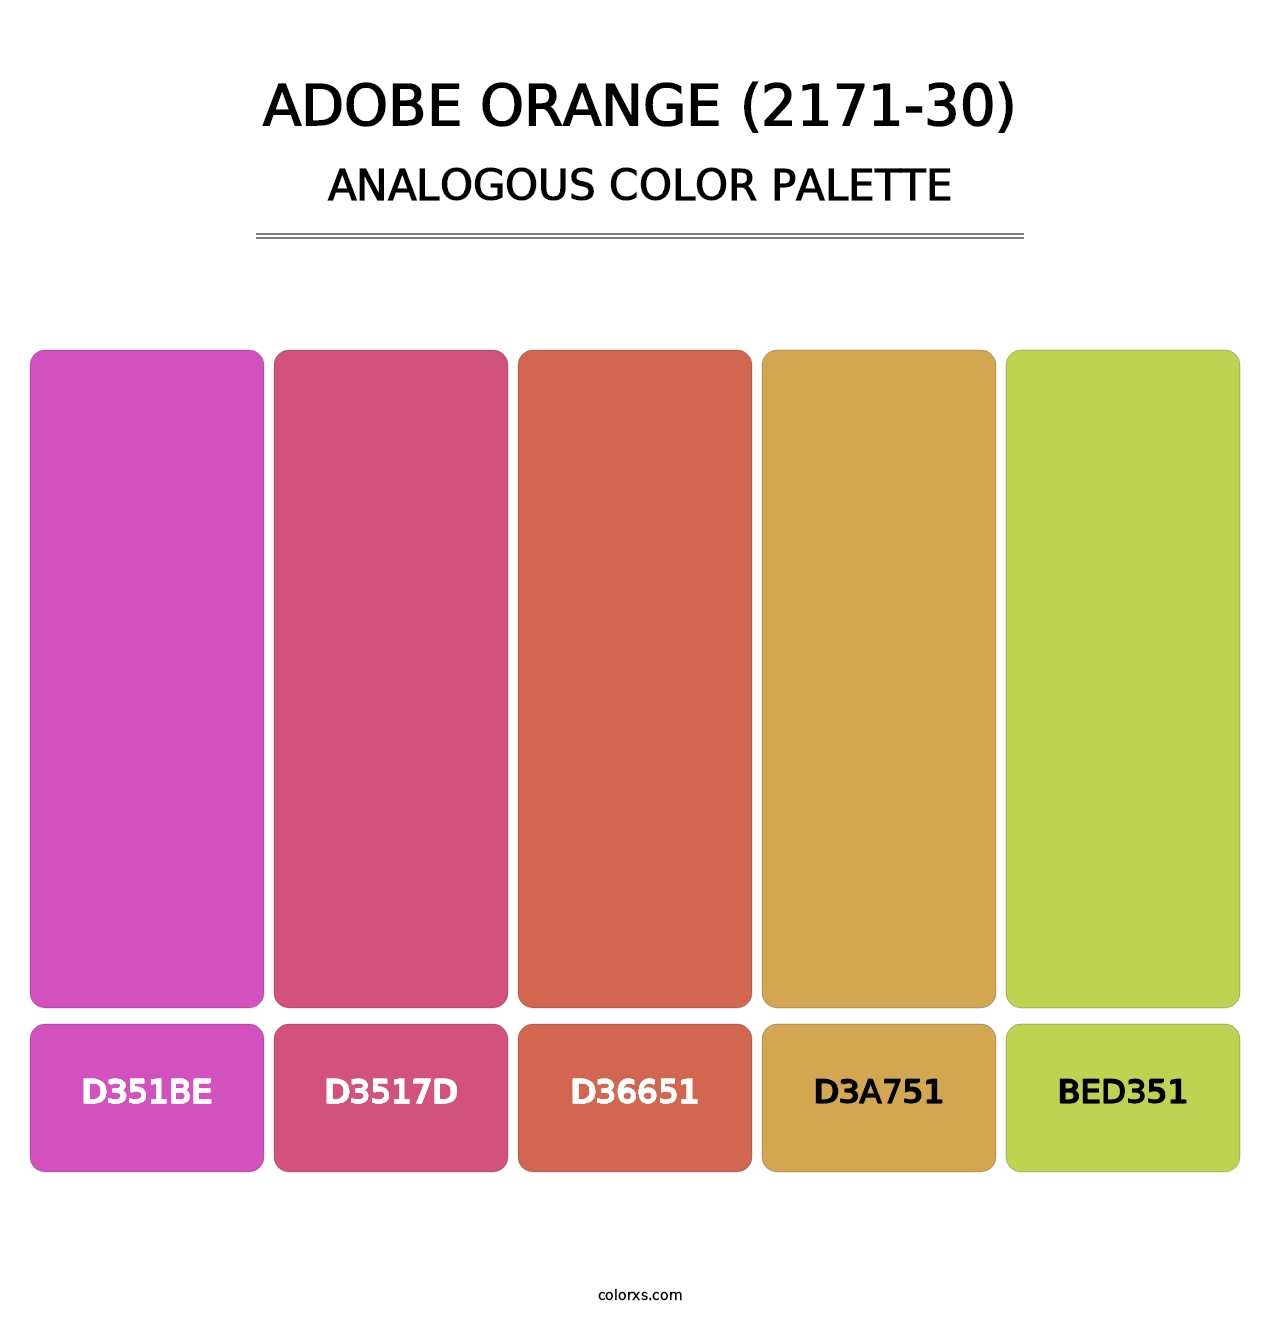 Adobe Orange (2171-30) - Analogous Color Palette